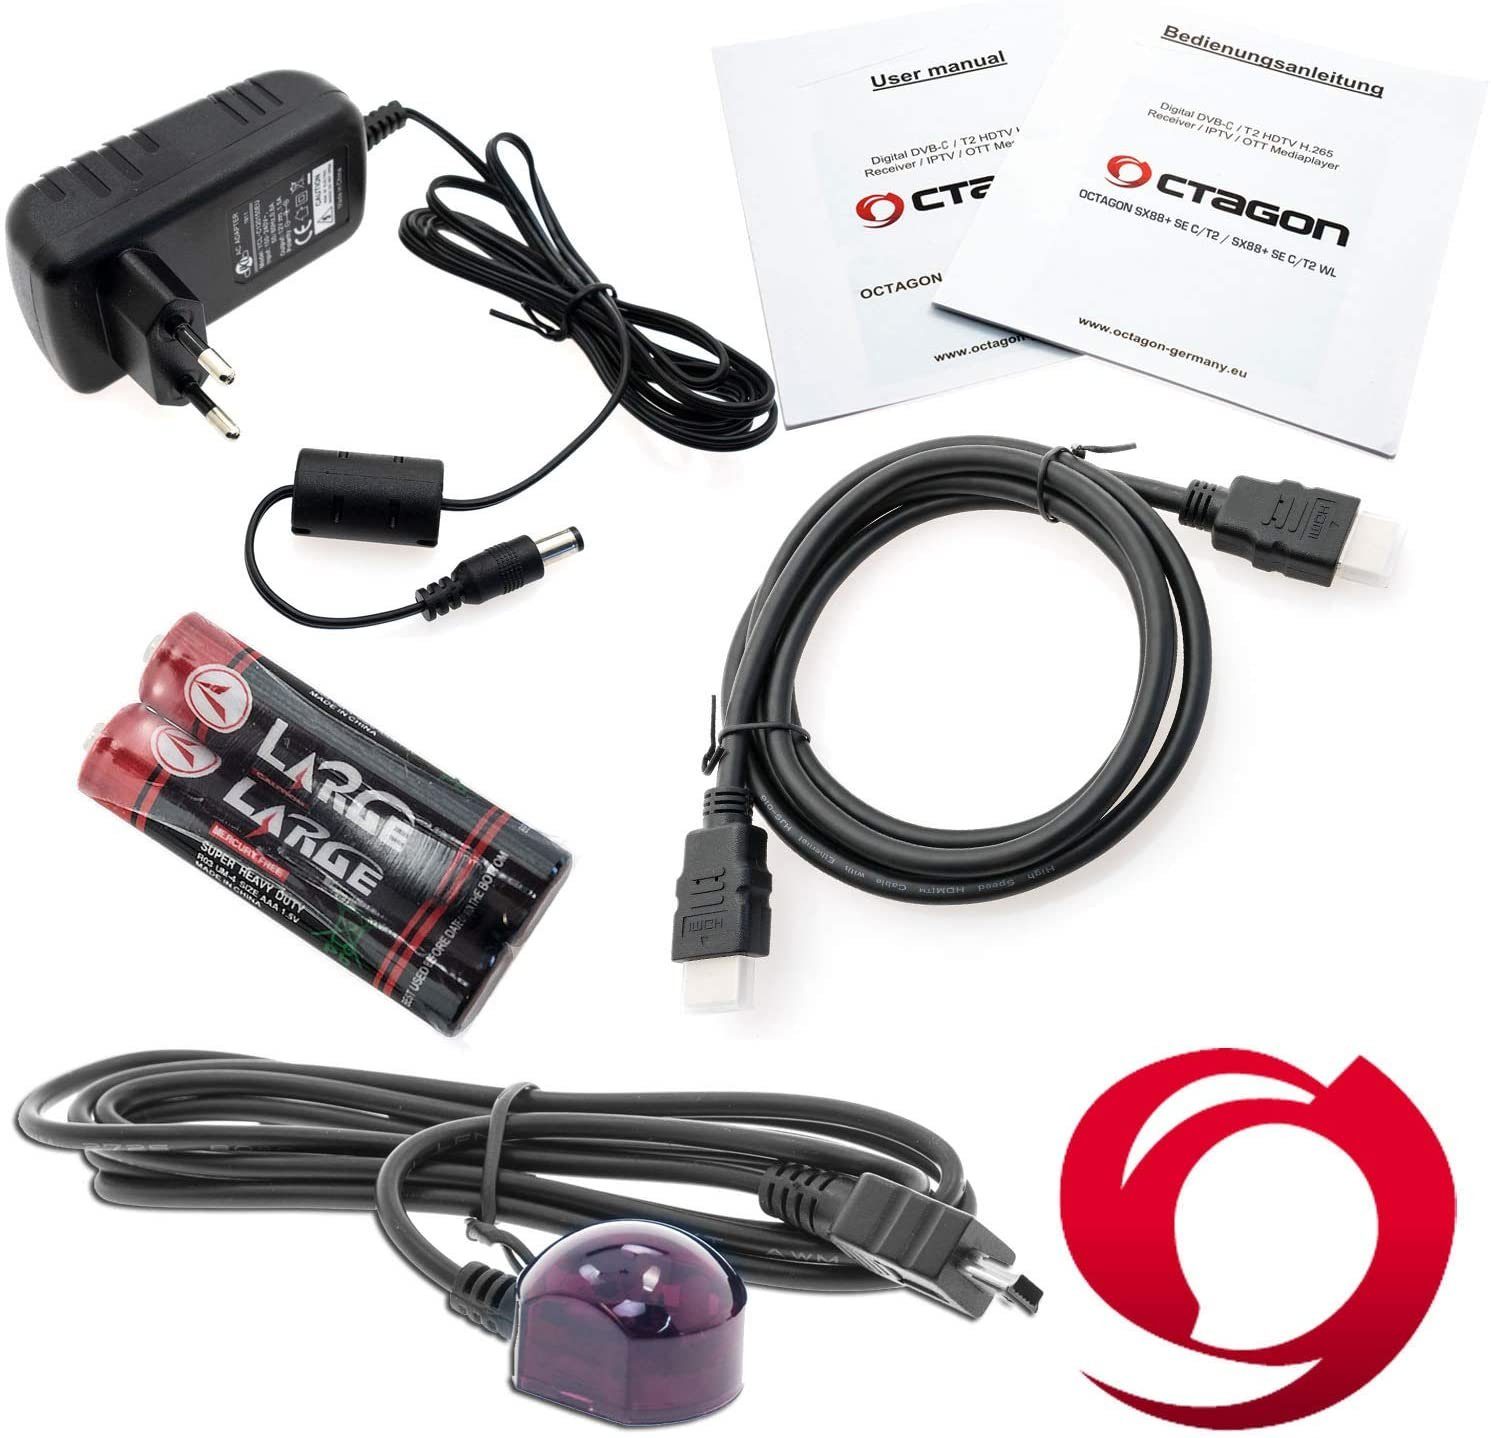 Smart HD OCTAGON Box + SE Mini C/T2 WL Kabel-Receiver Hybrid-Receiver H.265 SX88+ IPTV